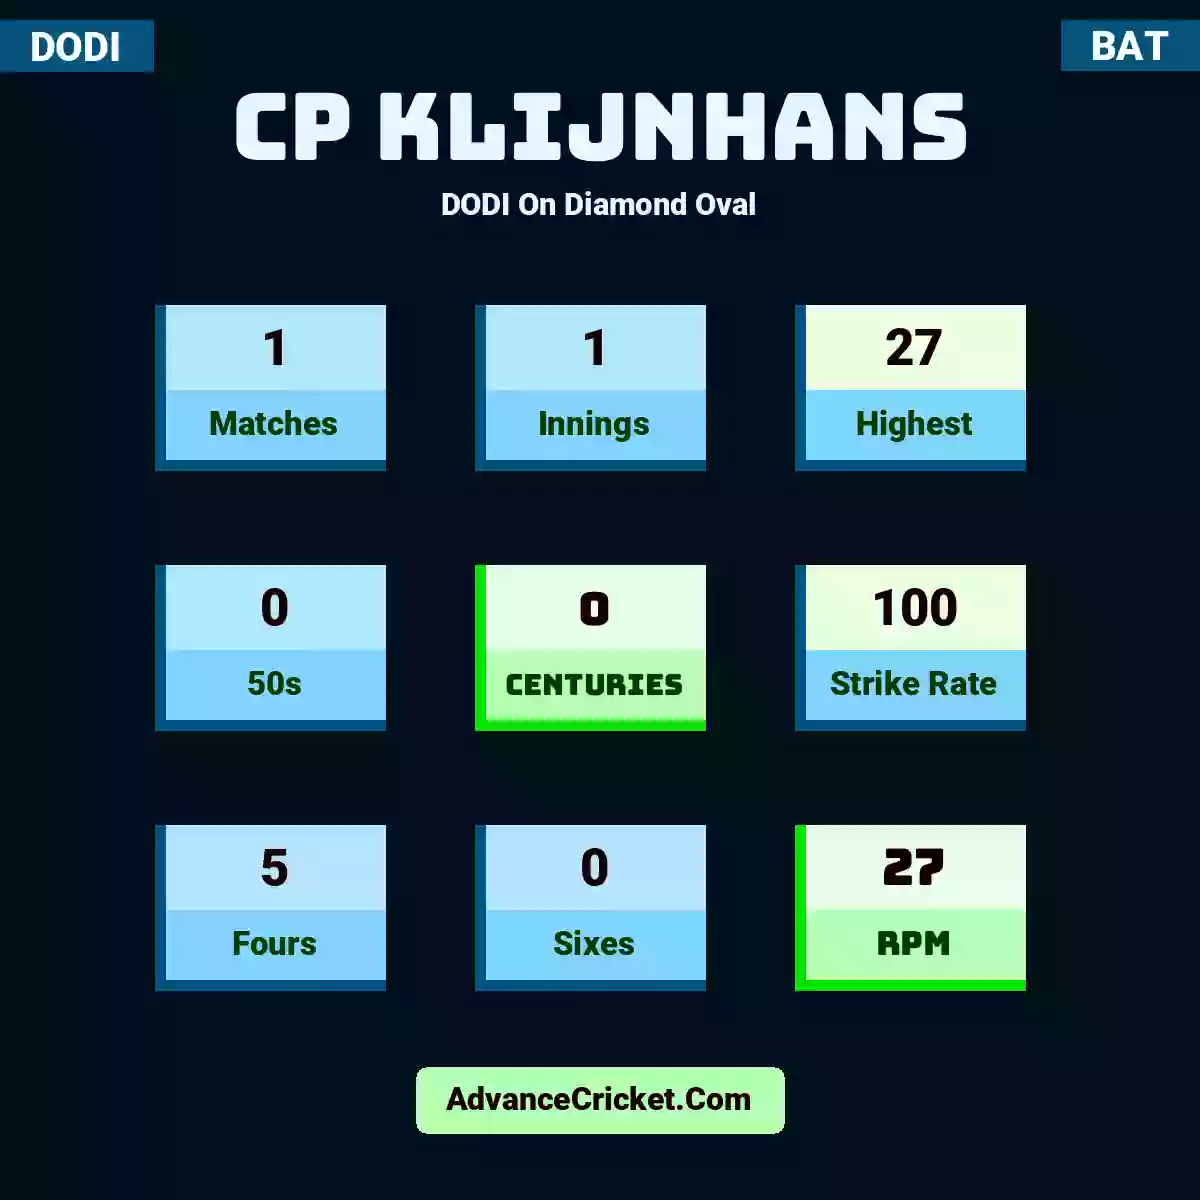 CP Klijnhans DODI  On Diamond Oval, CP Klijnhans played 1 matches, scored 27 runs as highest, 0 half-centuries, and 0 centuries, with a strike rate of 100. C.Klijnhans hit 5 fours and 0 sixes, with an RPM of 27.